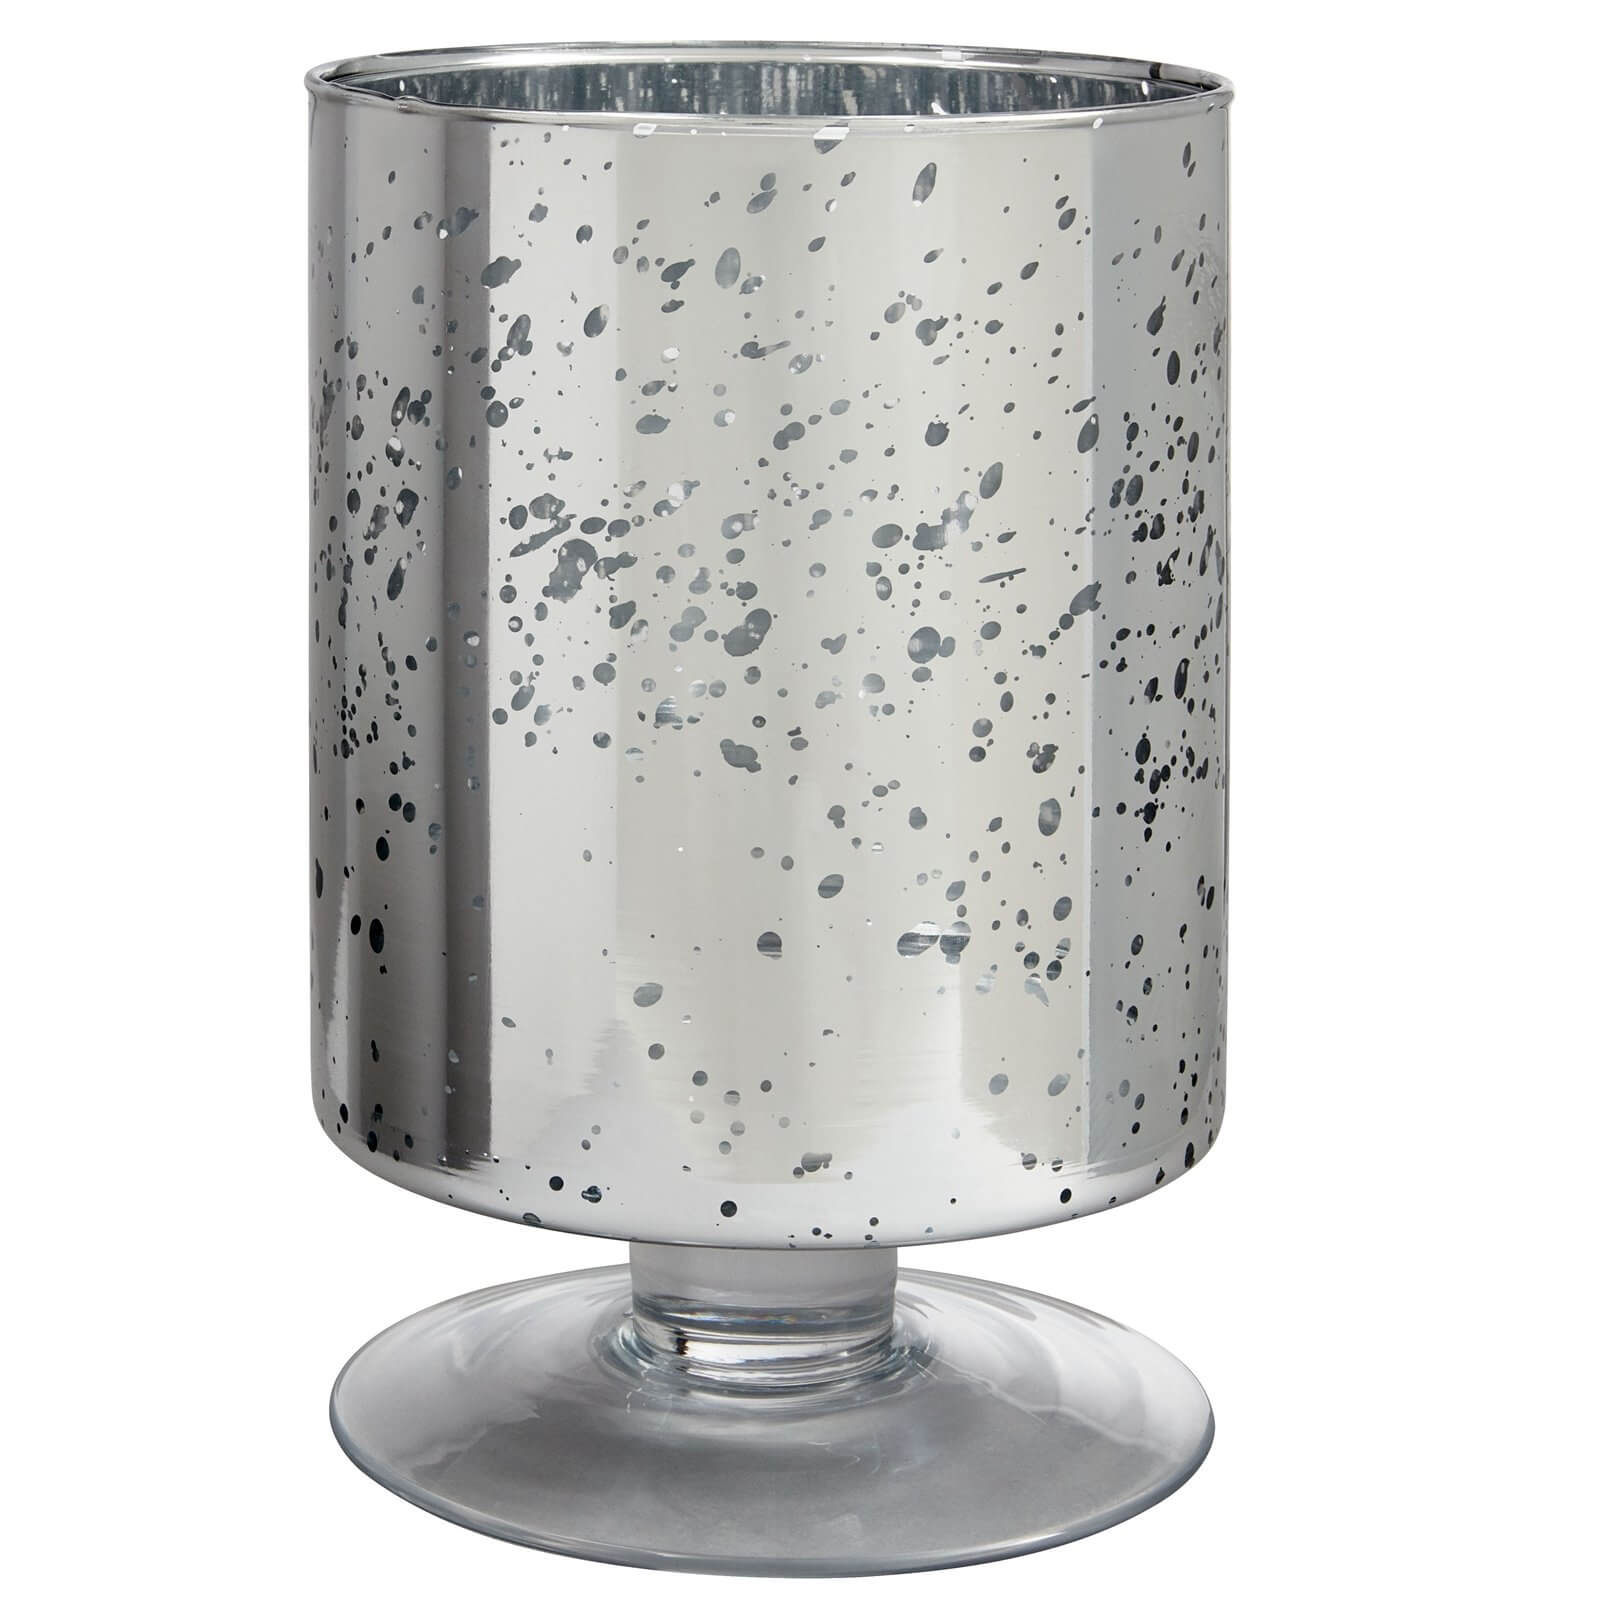 Hurricane Jar Candle Holder - Silver Mercury